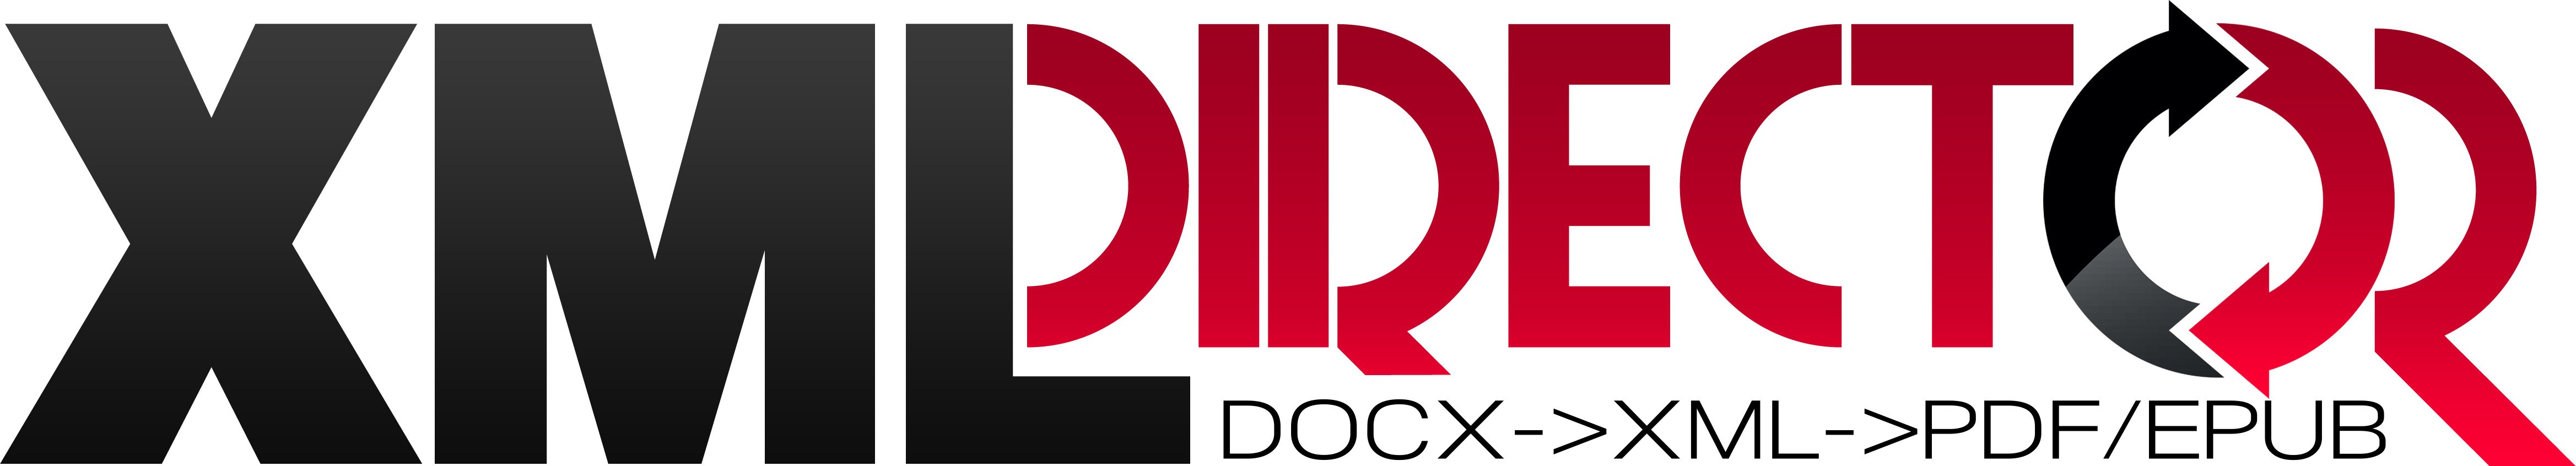 docs/source/images/xml-director-logo.jpg